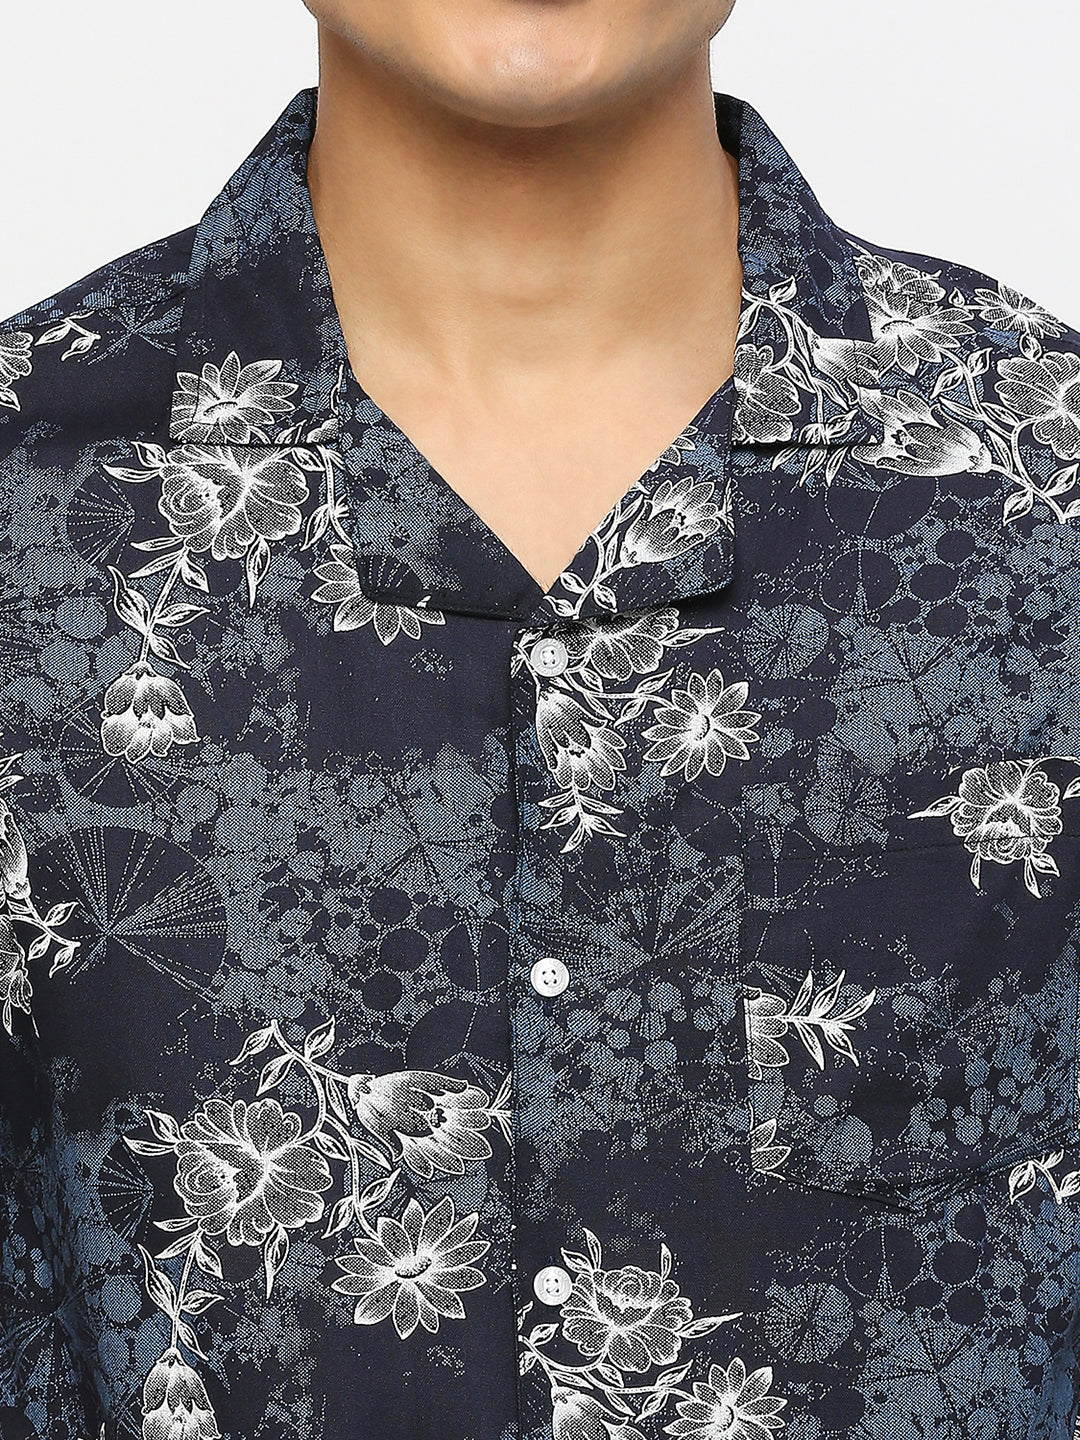 Moonlight Floral Print Navy Shirt